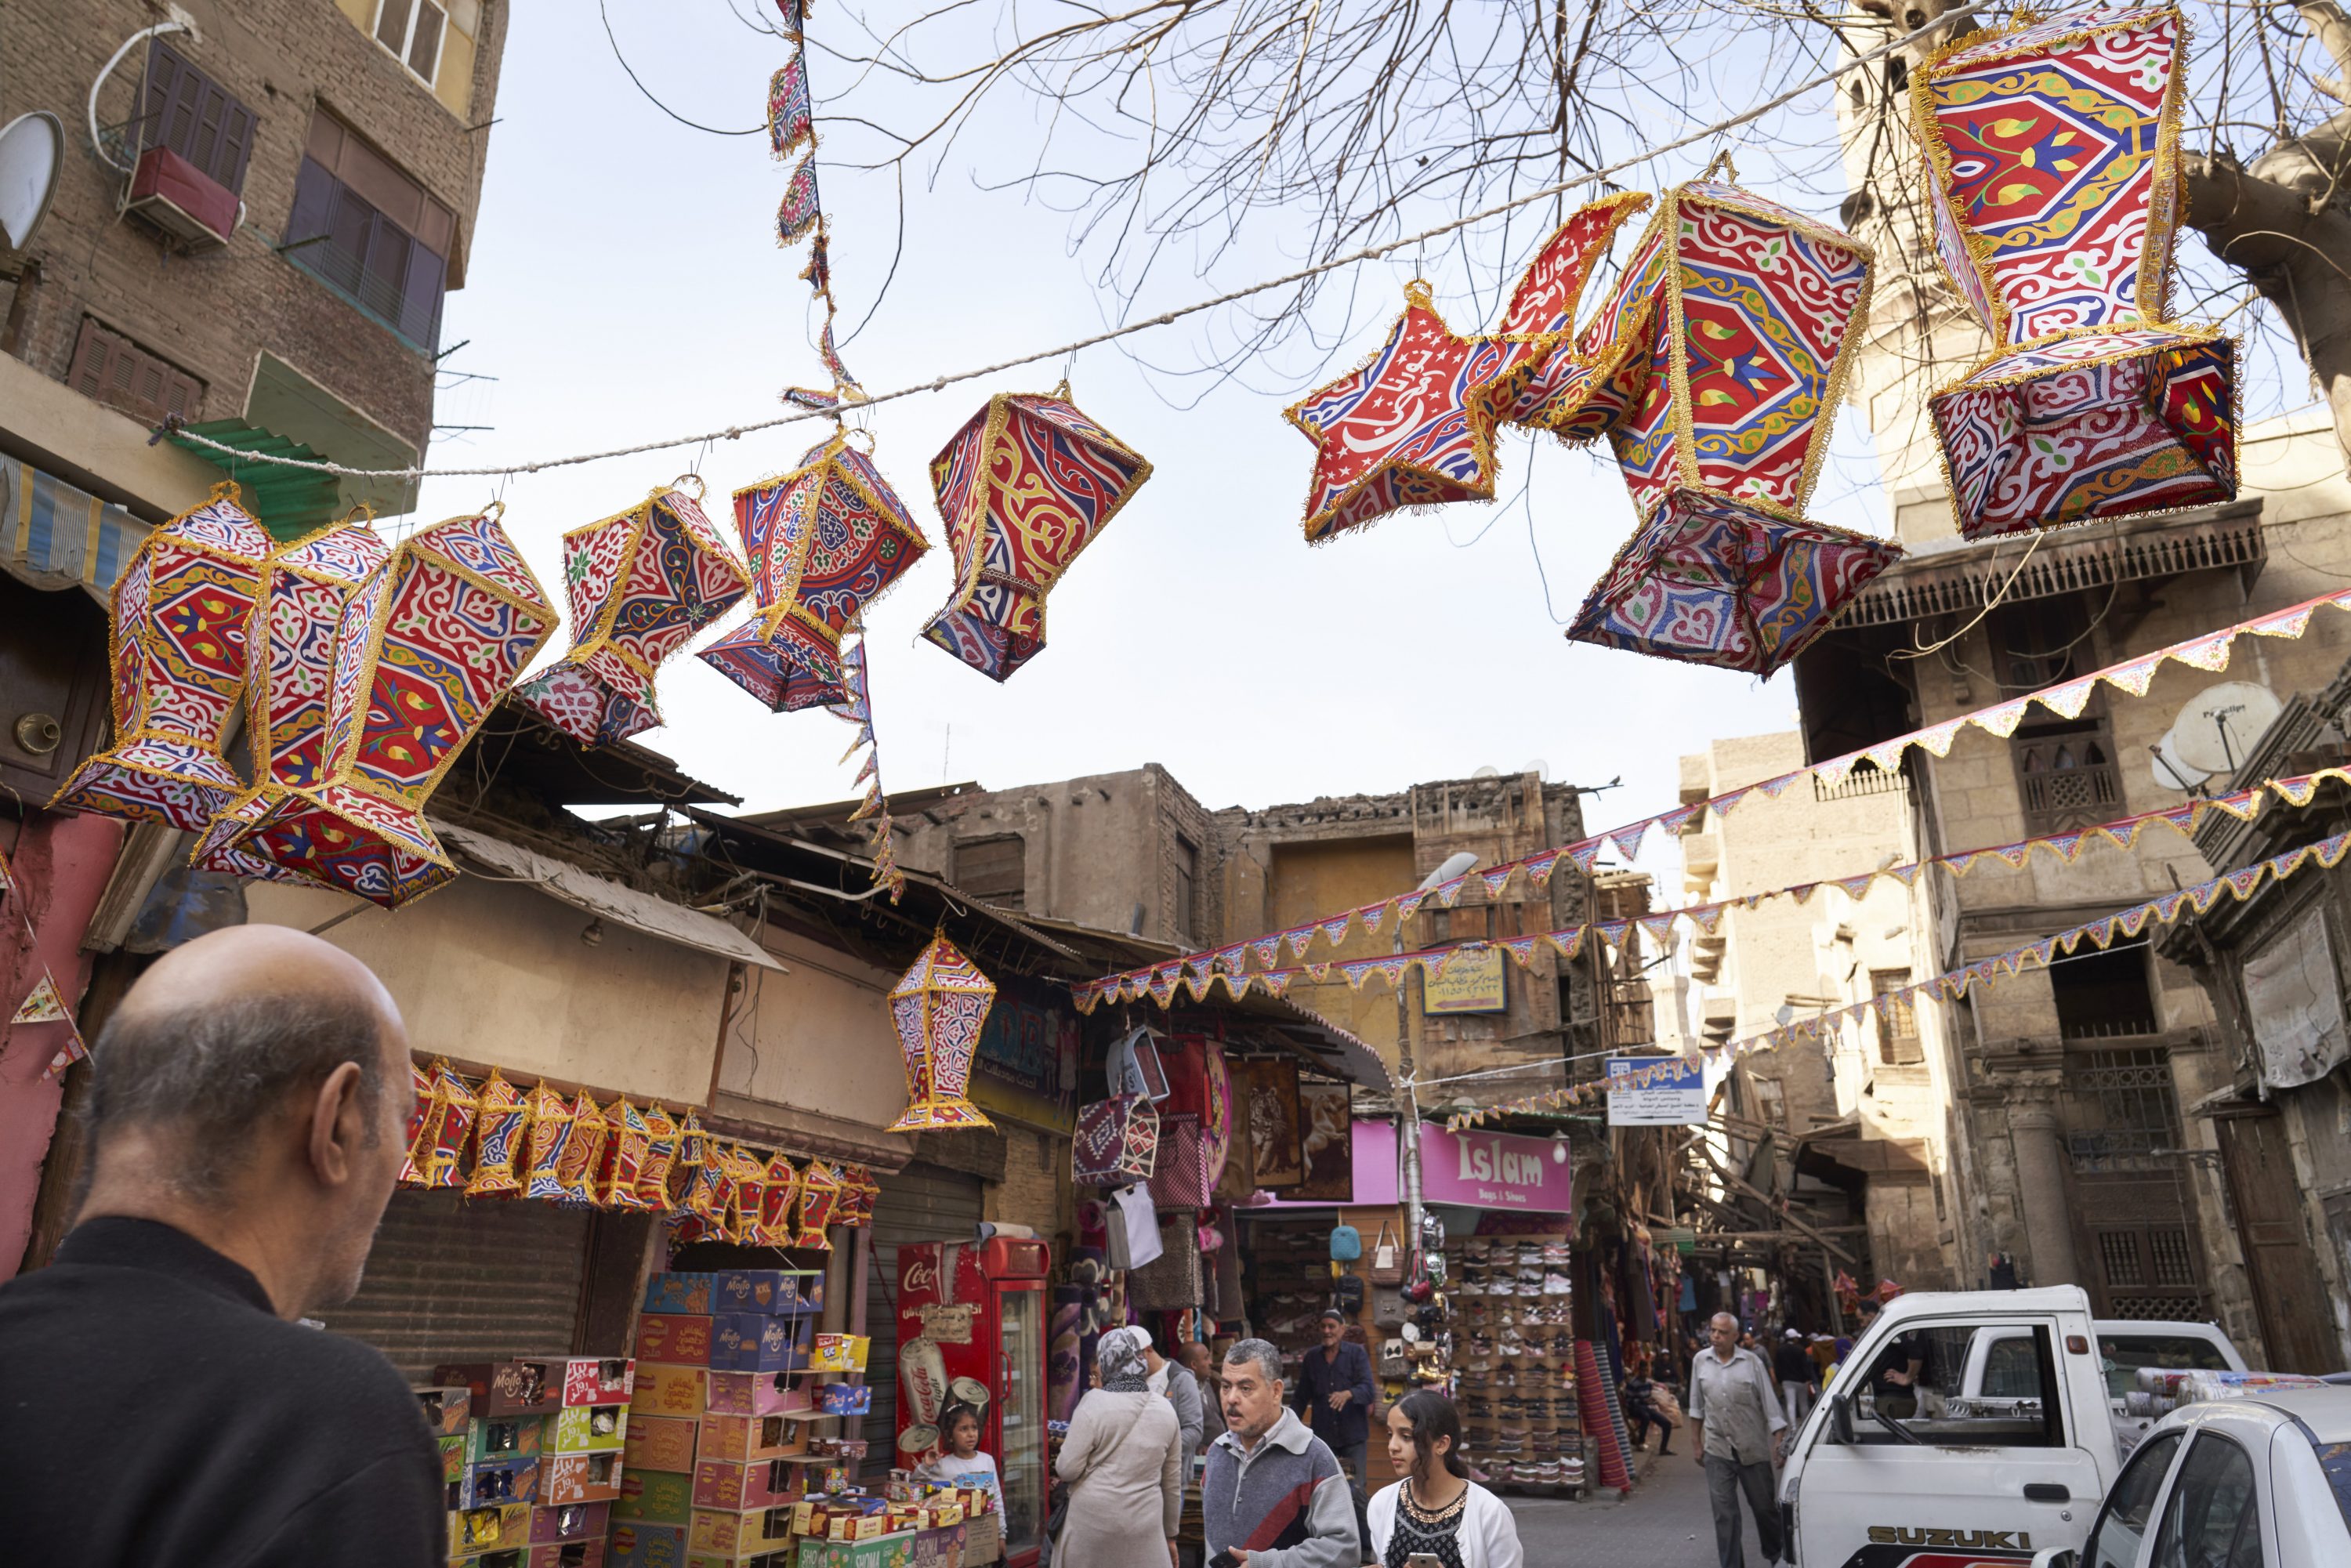 Cloth Ramadan lanterns hang over the Al-Khayama street in Darb Al-Ahmar